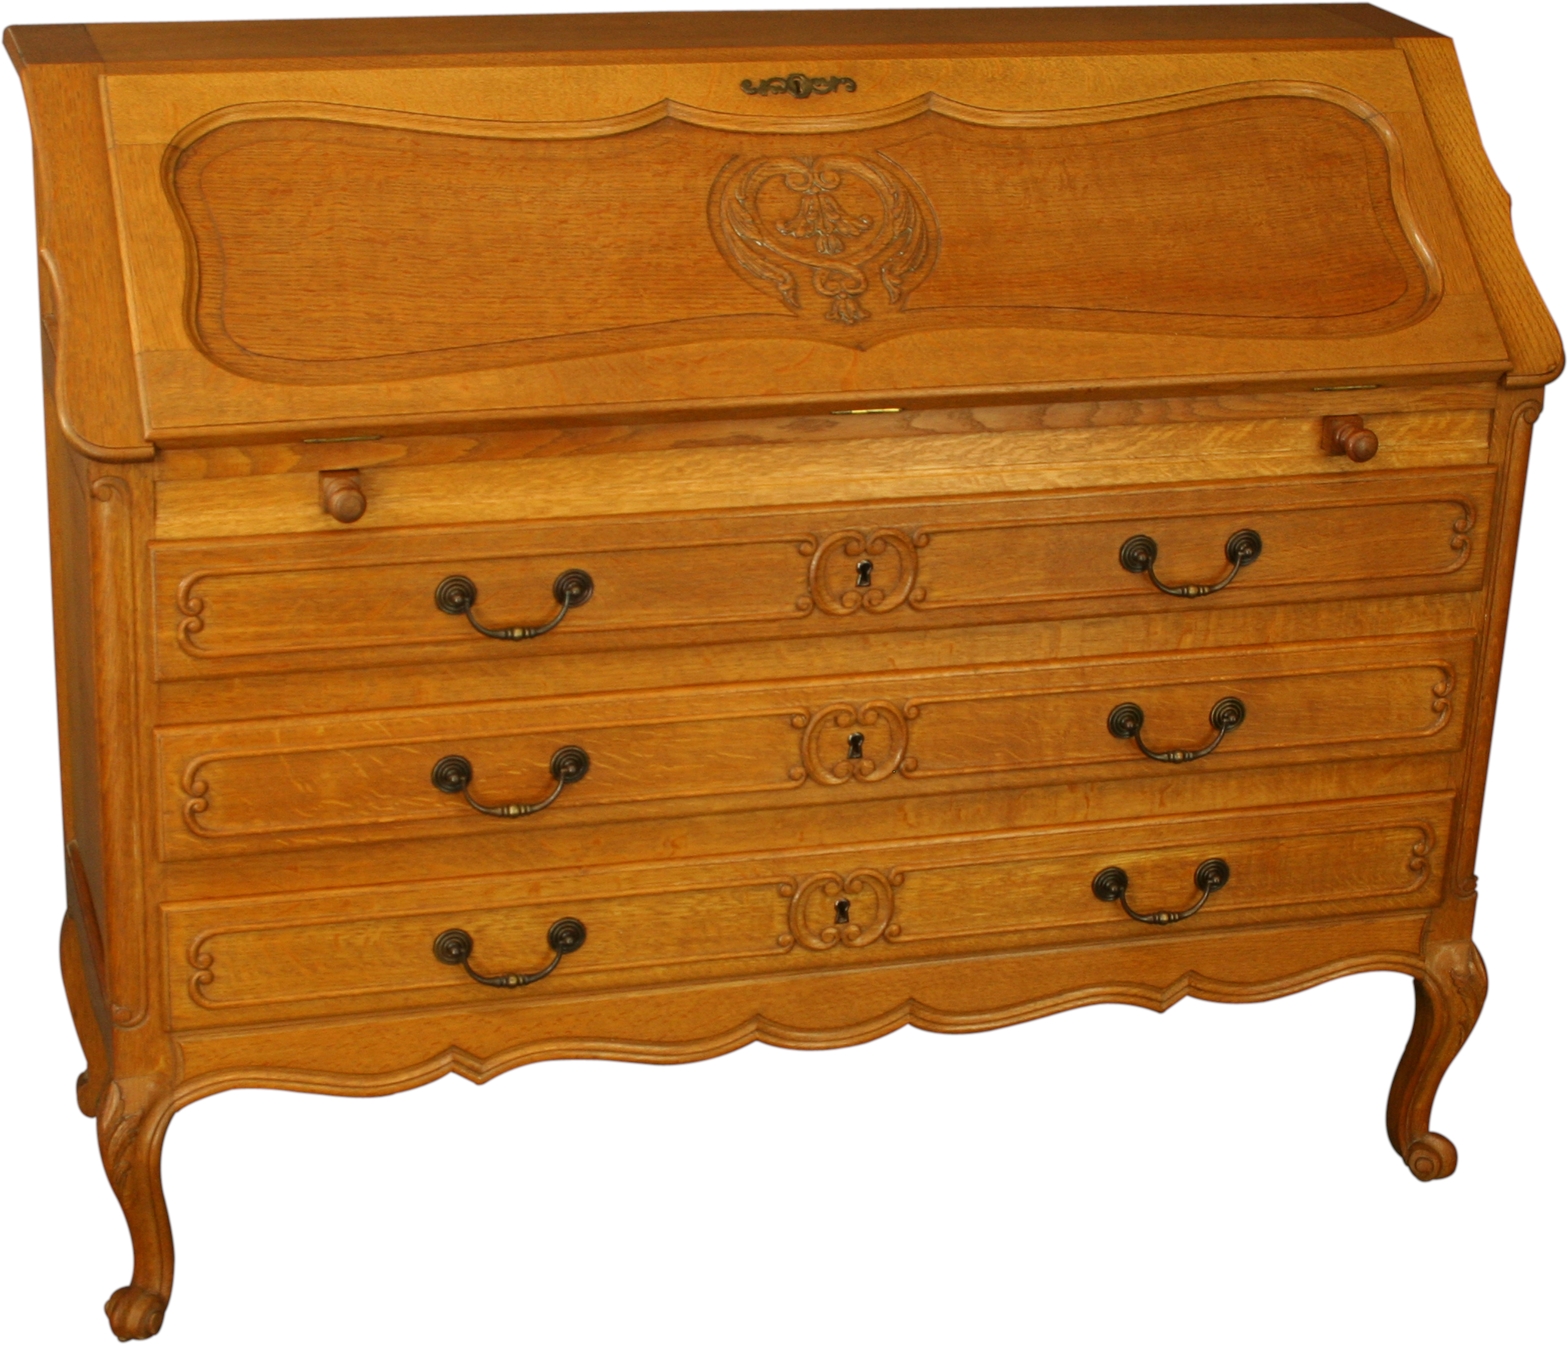 Vintage French Secretary Desk, Quartersawn Golden Oak, Carved, Louis XV Style-Image 1